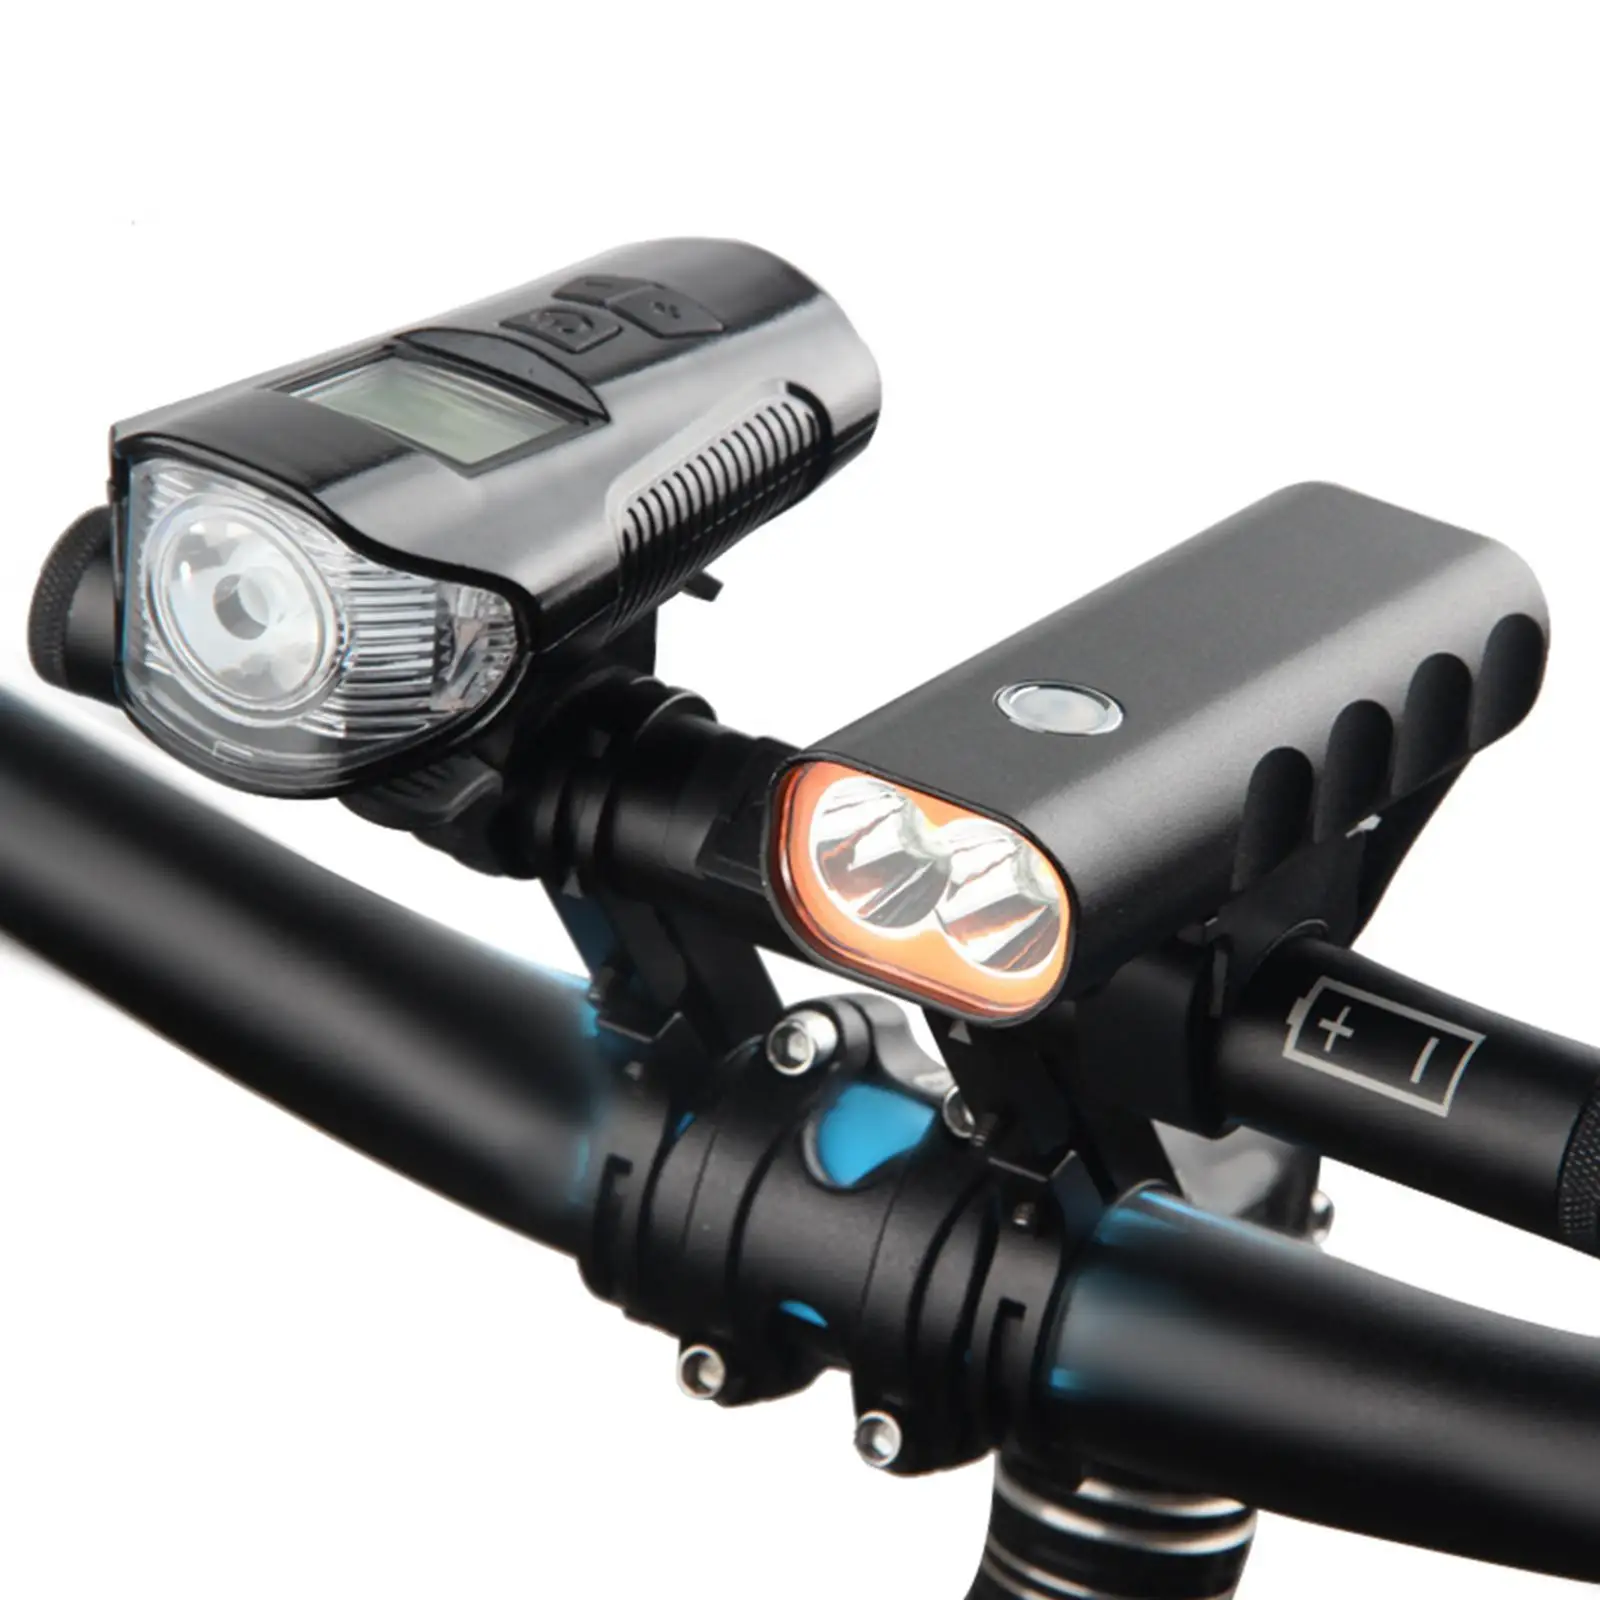 Rechargeable Bicycle Handle Bar Extension Holder Rod USB Charging Bike Handlebar